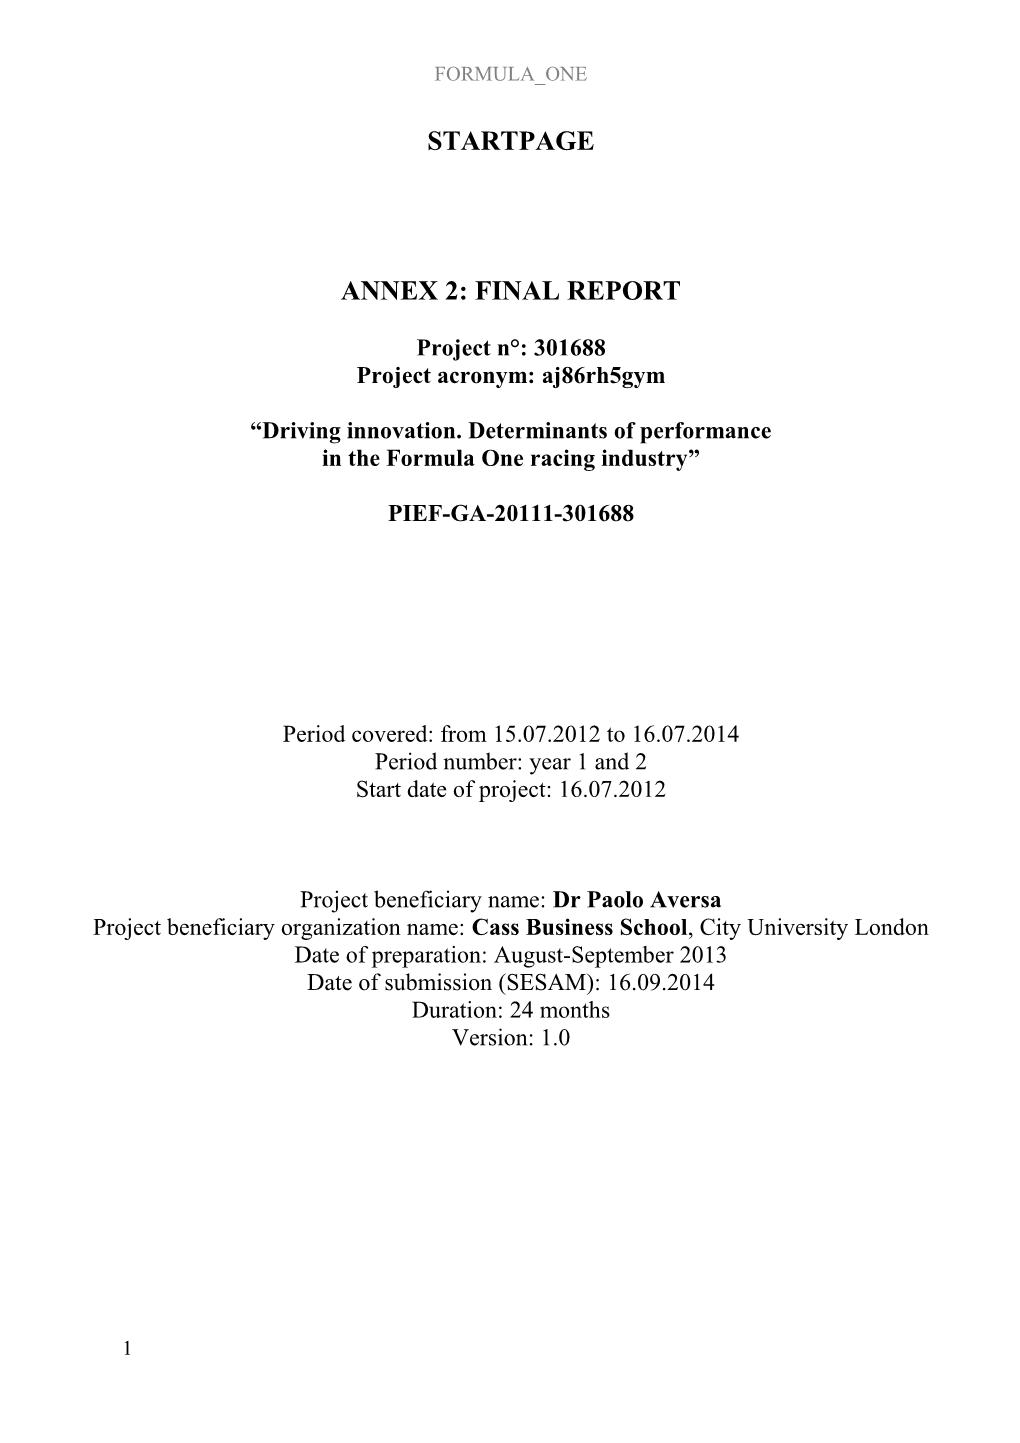 Annex 2: Final Report